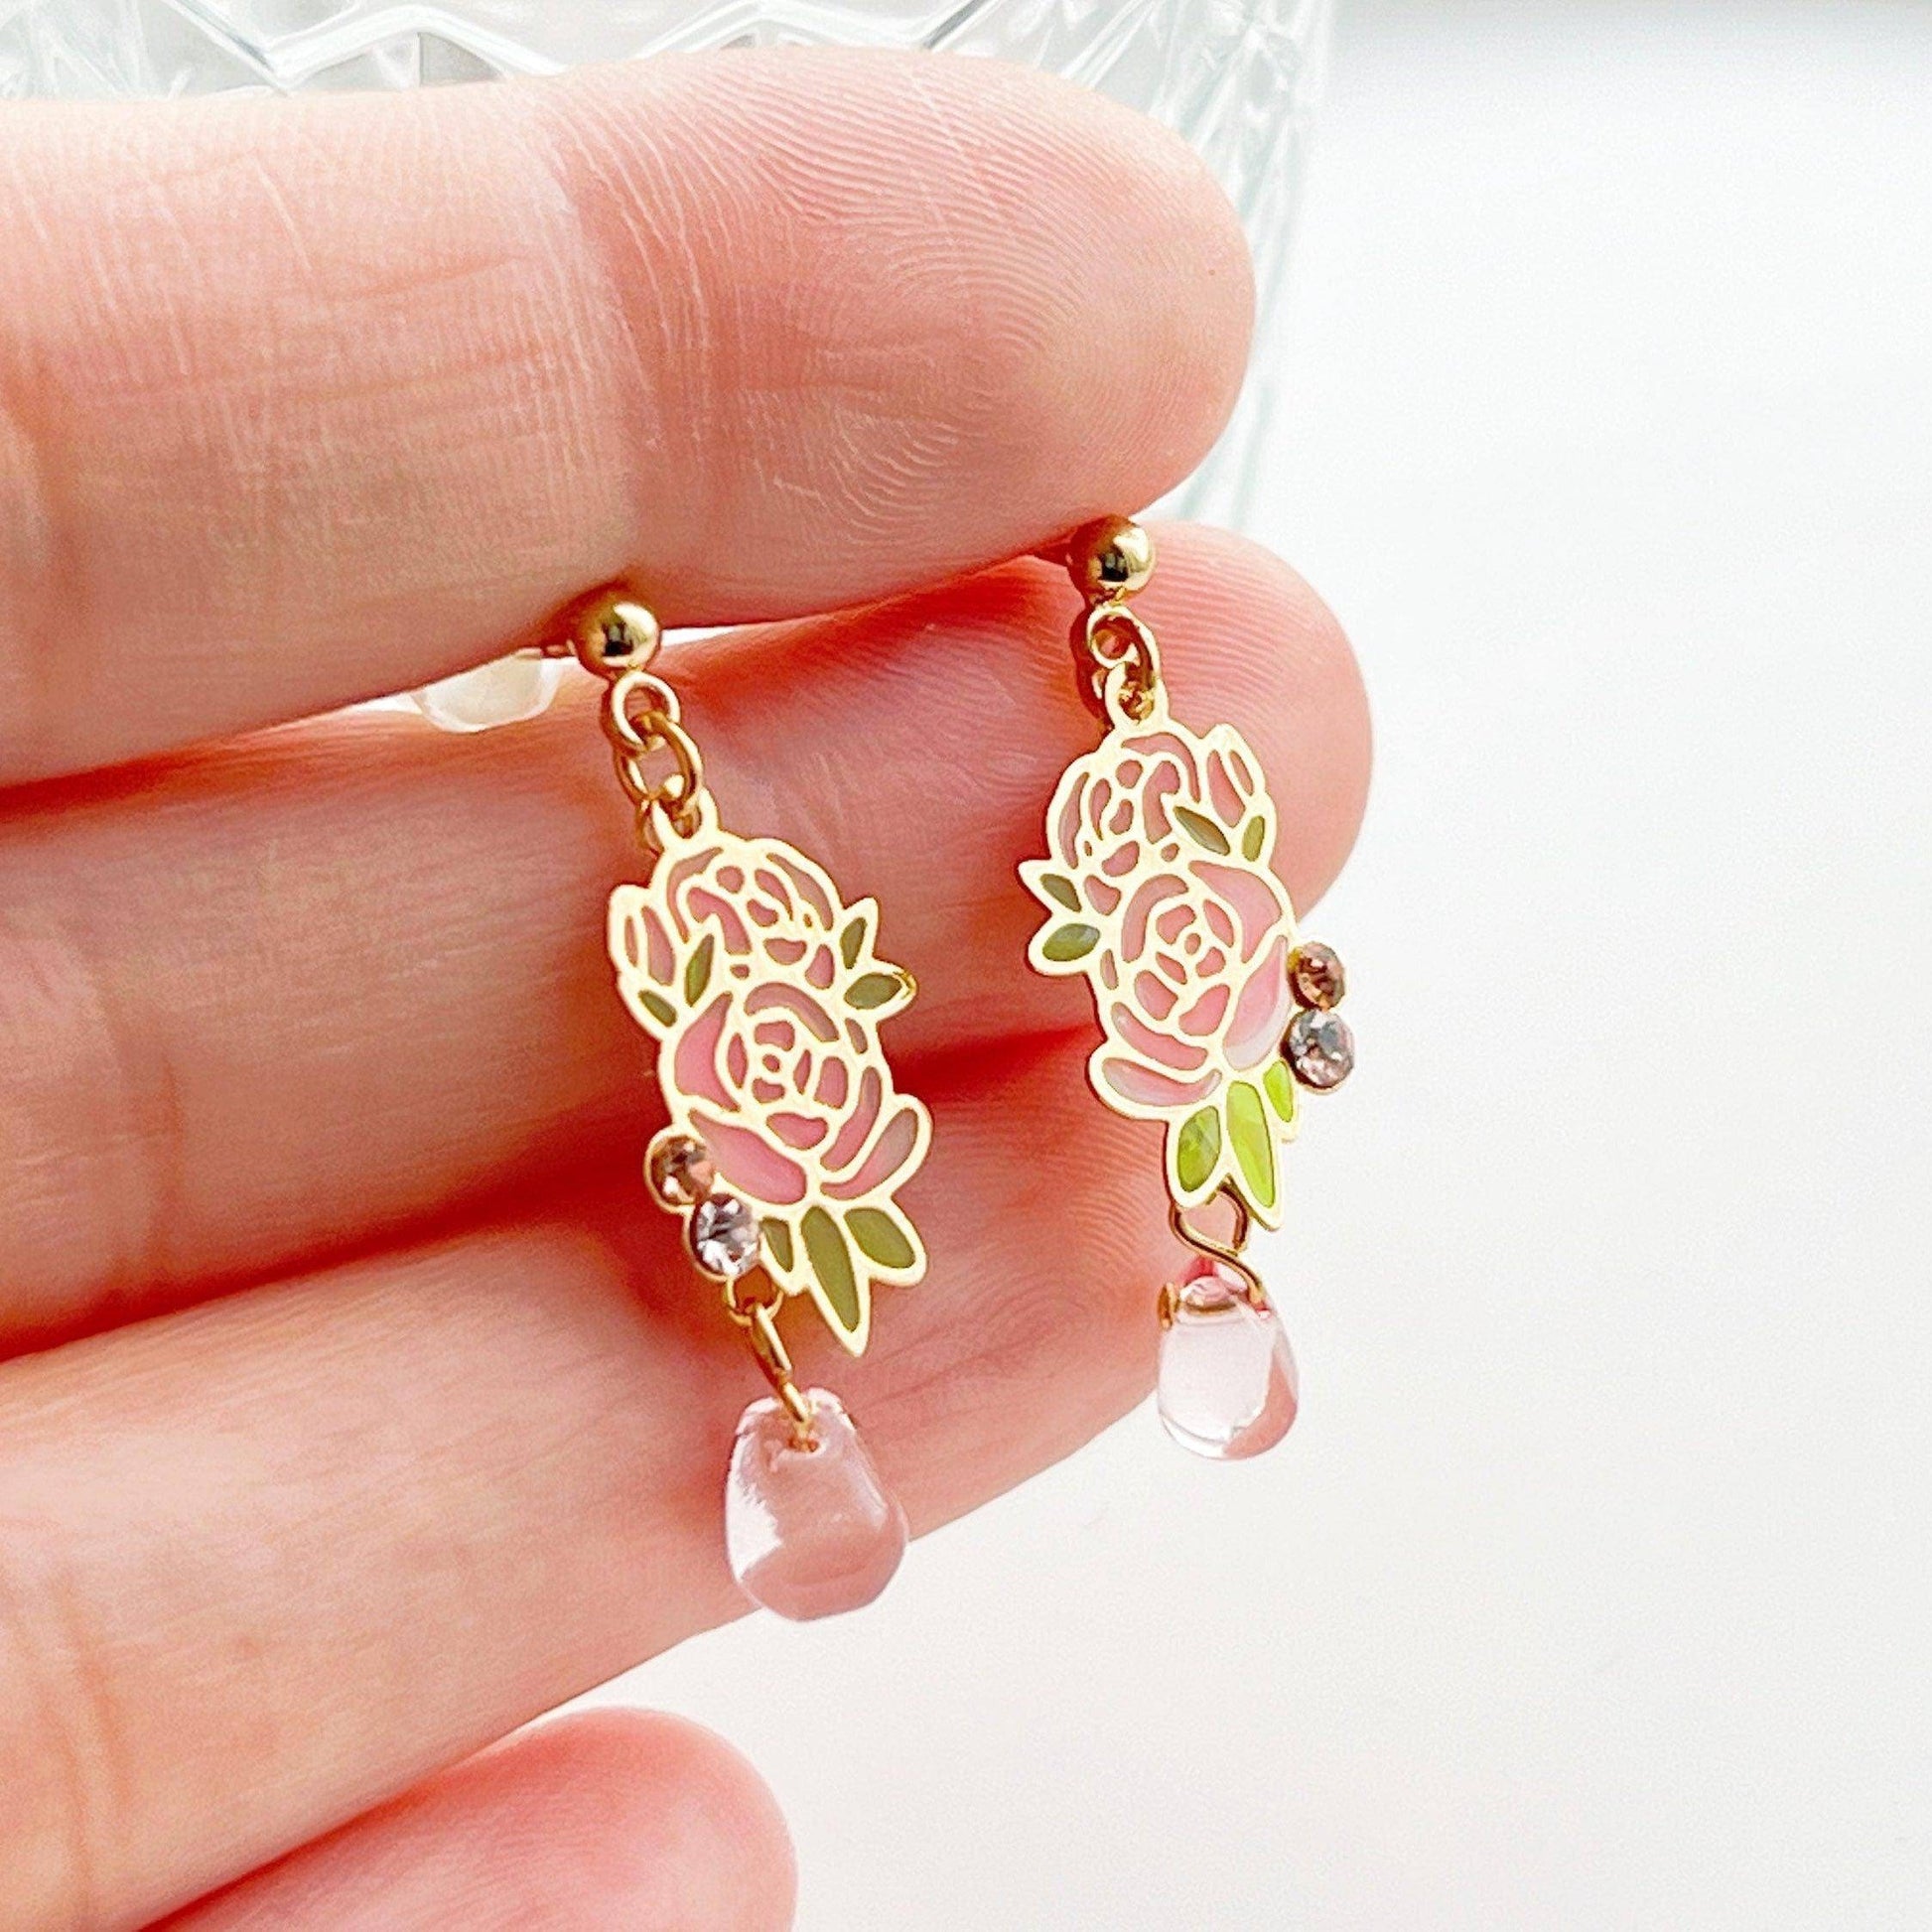 Pink Rose Earrings -  Rose Flower with Green Leaves Drop Earrings-Ninaouity